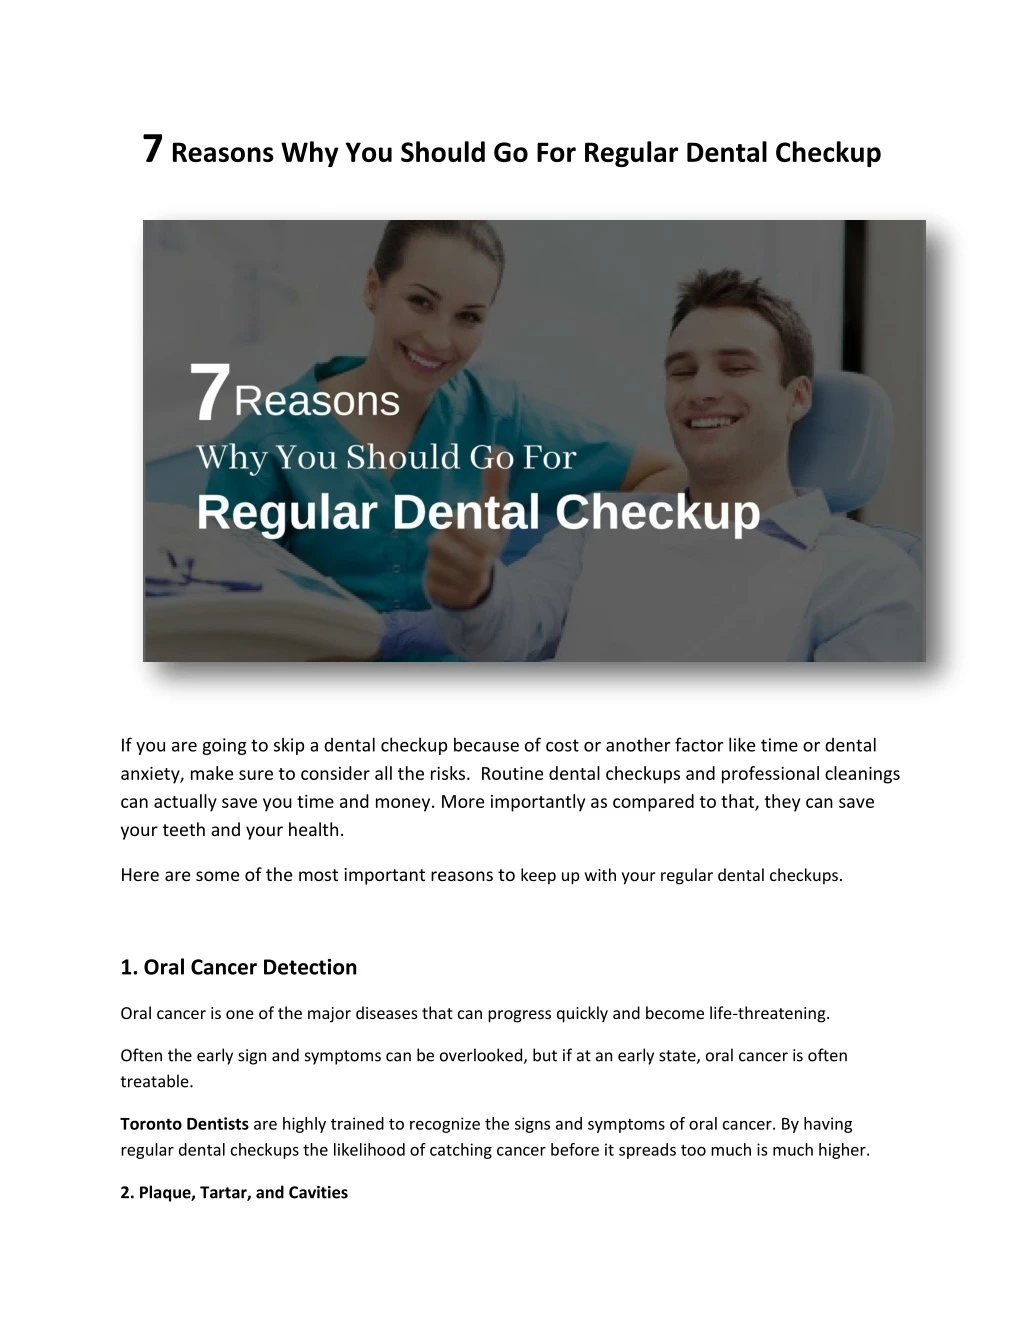 7 reasons why you should go for regular dental